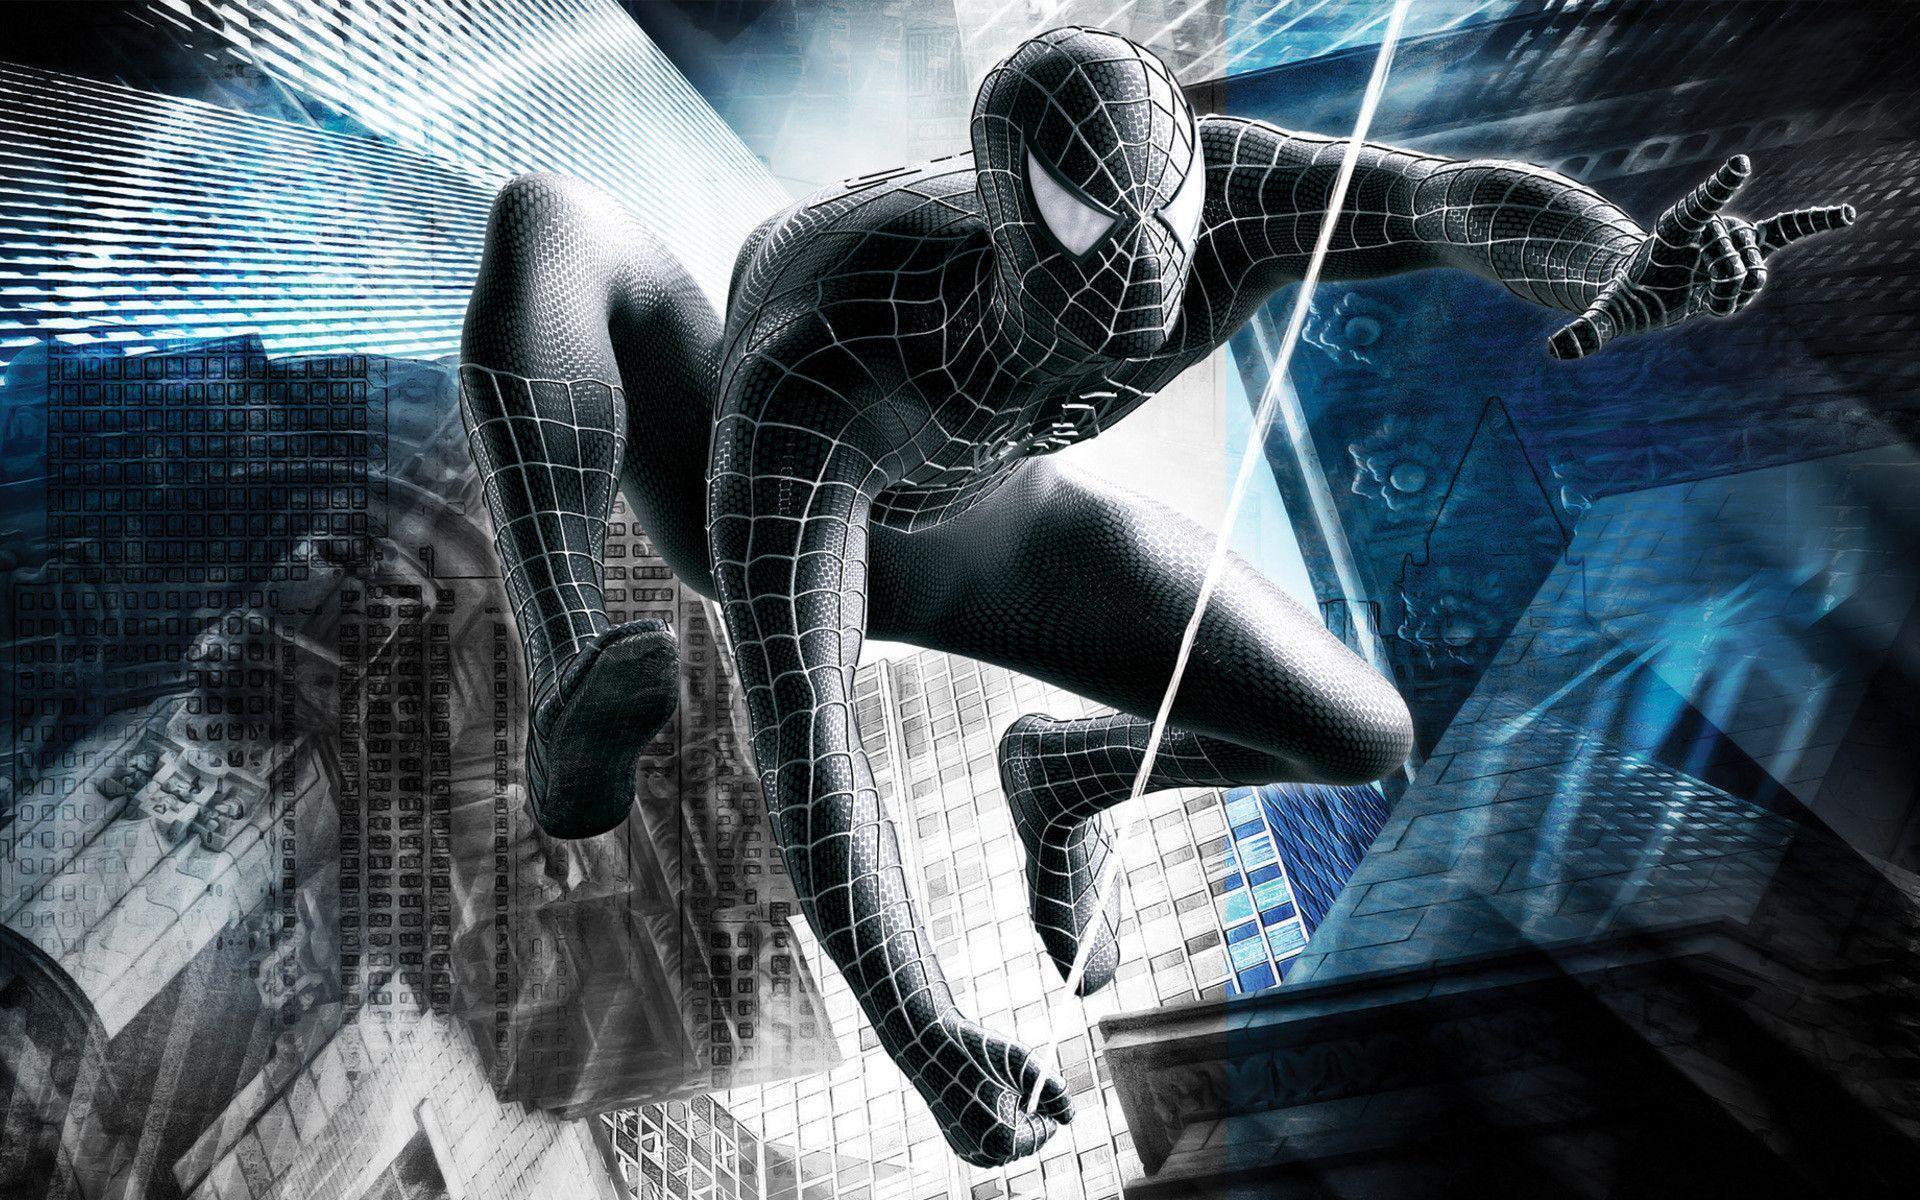 Black Spider Man 3 HD Games Wallpaper Game Gaming Pc Mac Android